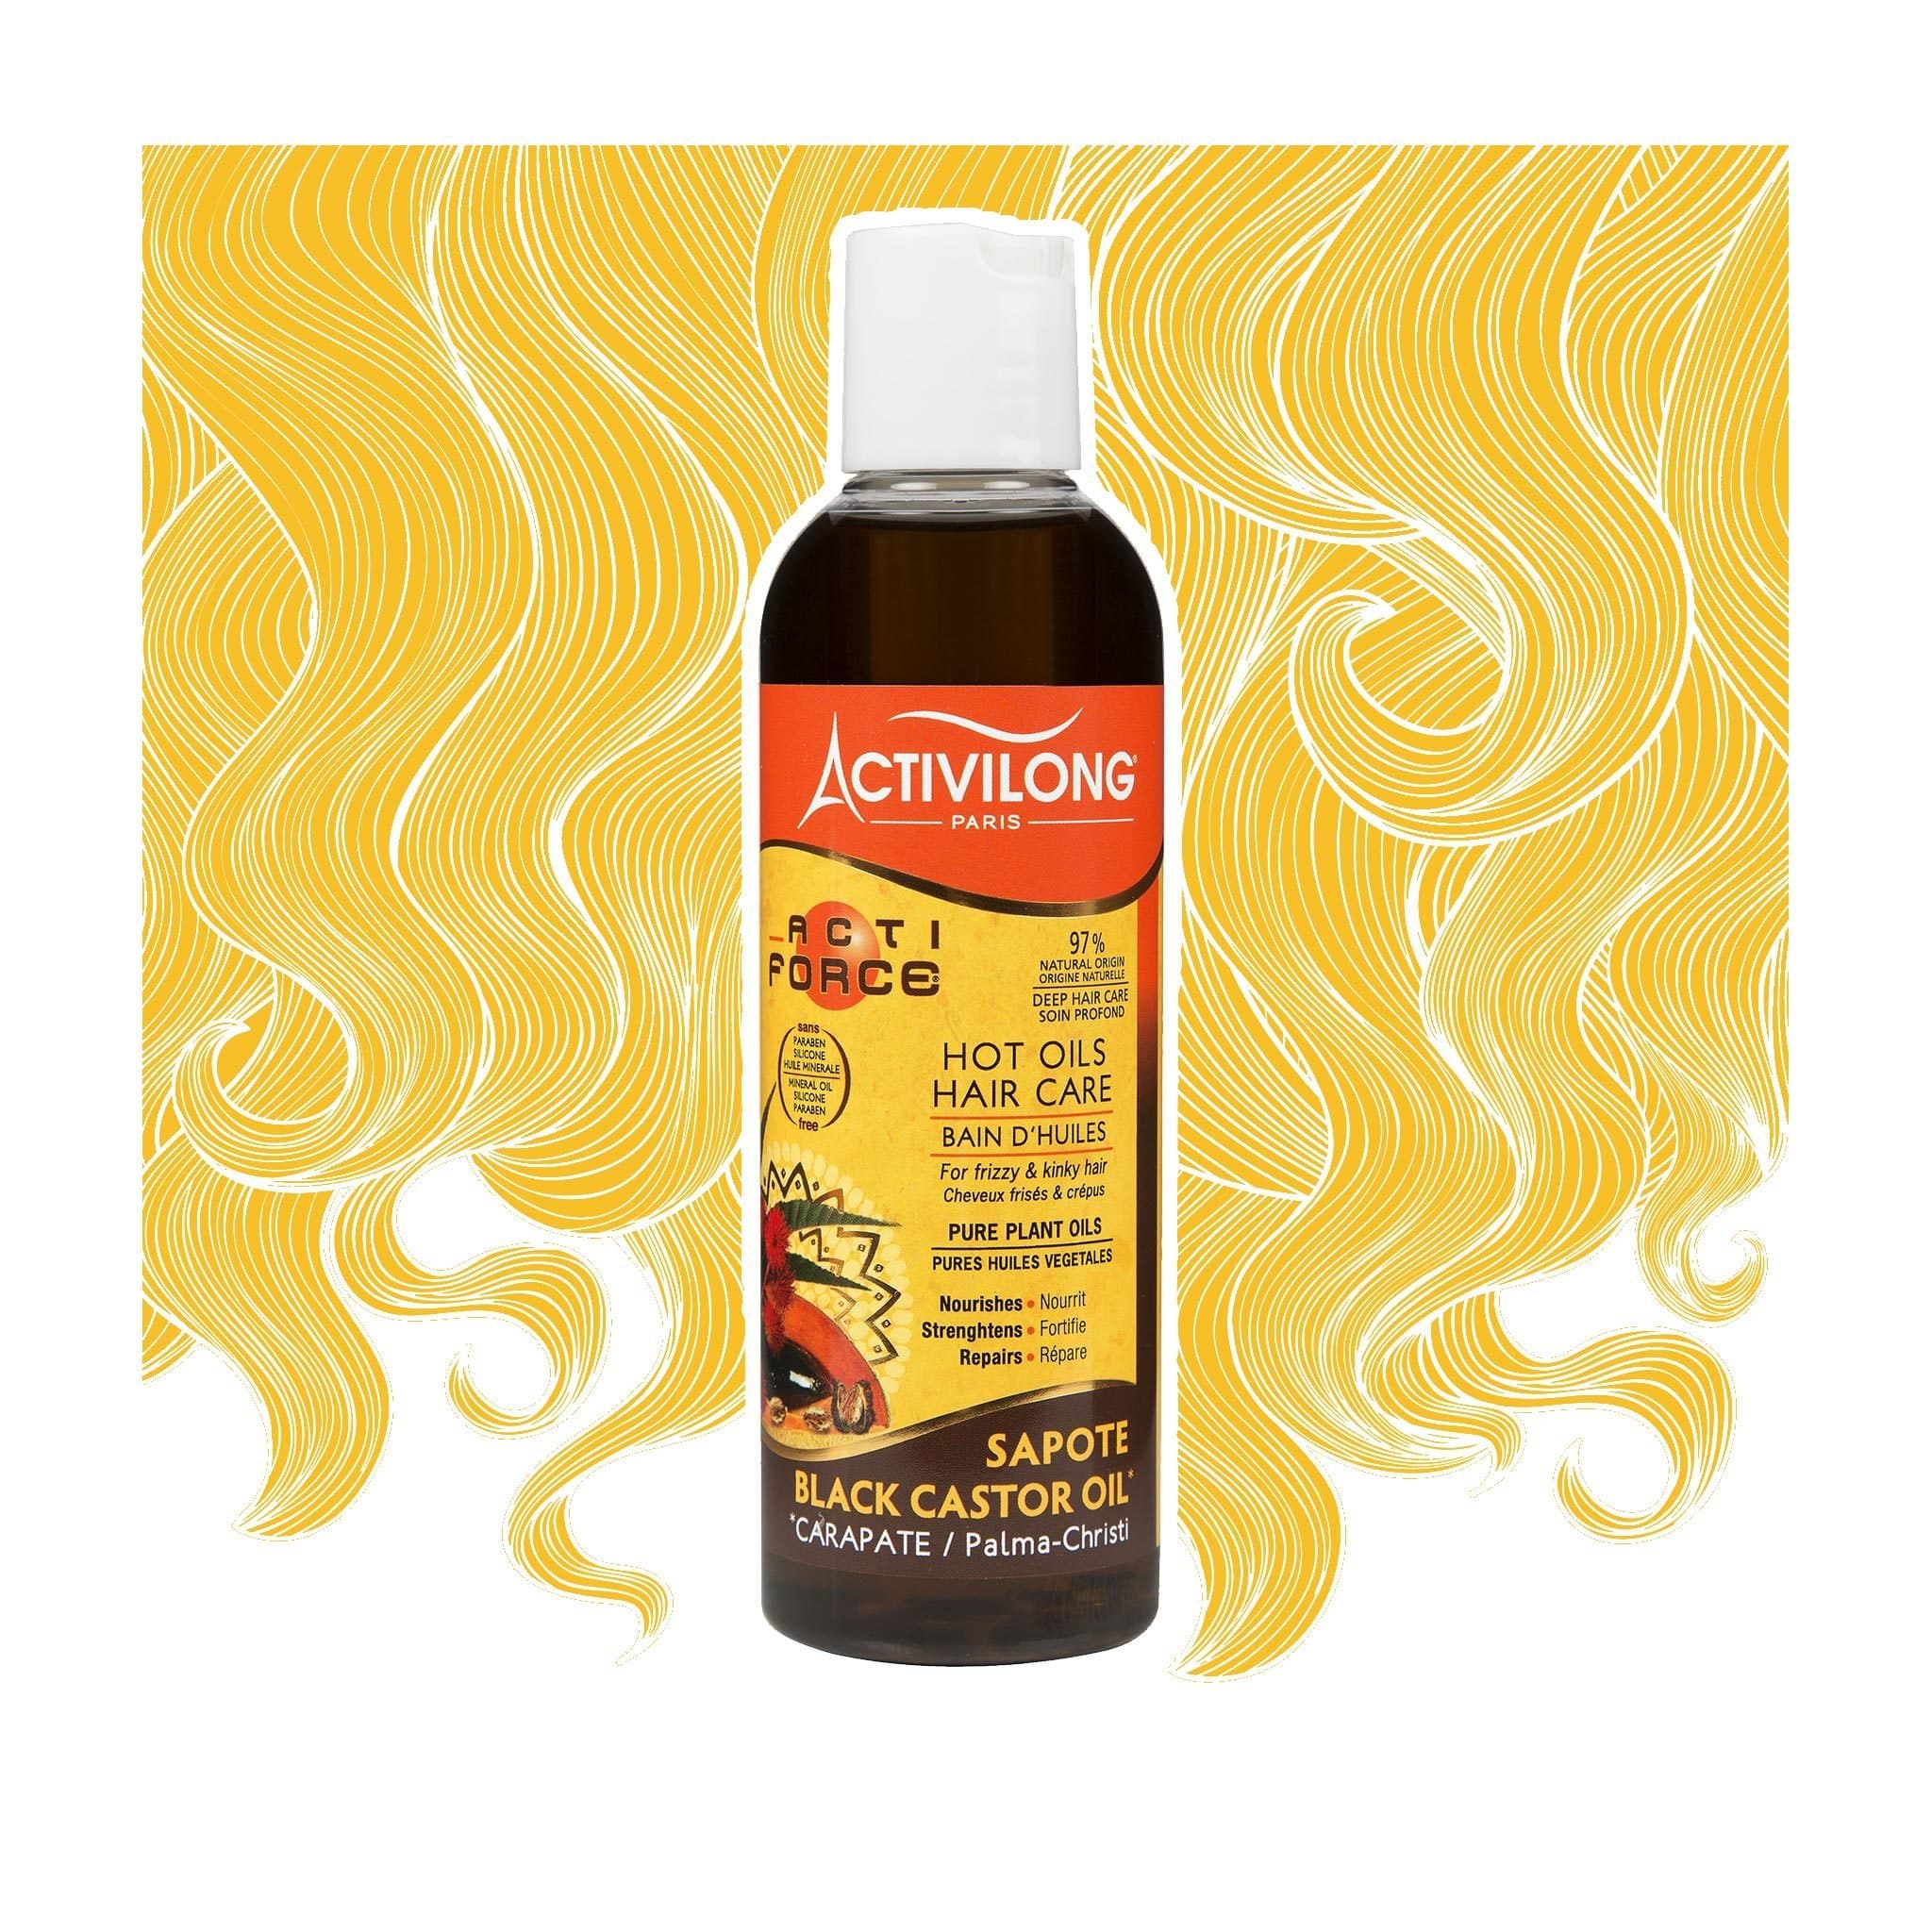 Activilong | Cura dei capelli a olio caldo Actiforce - lockenkopf